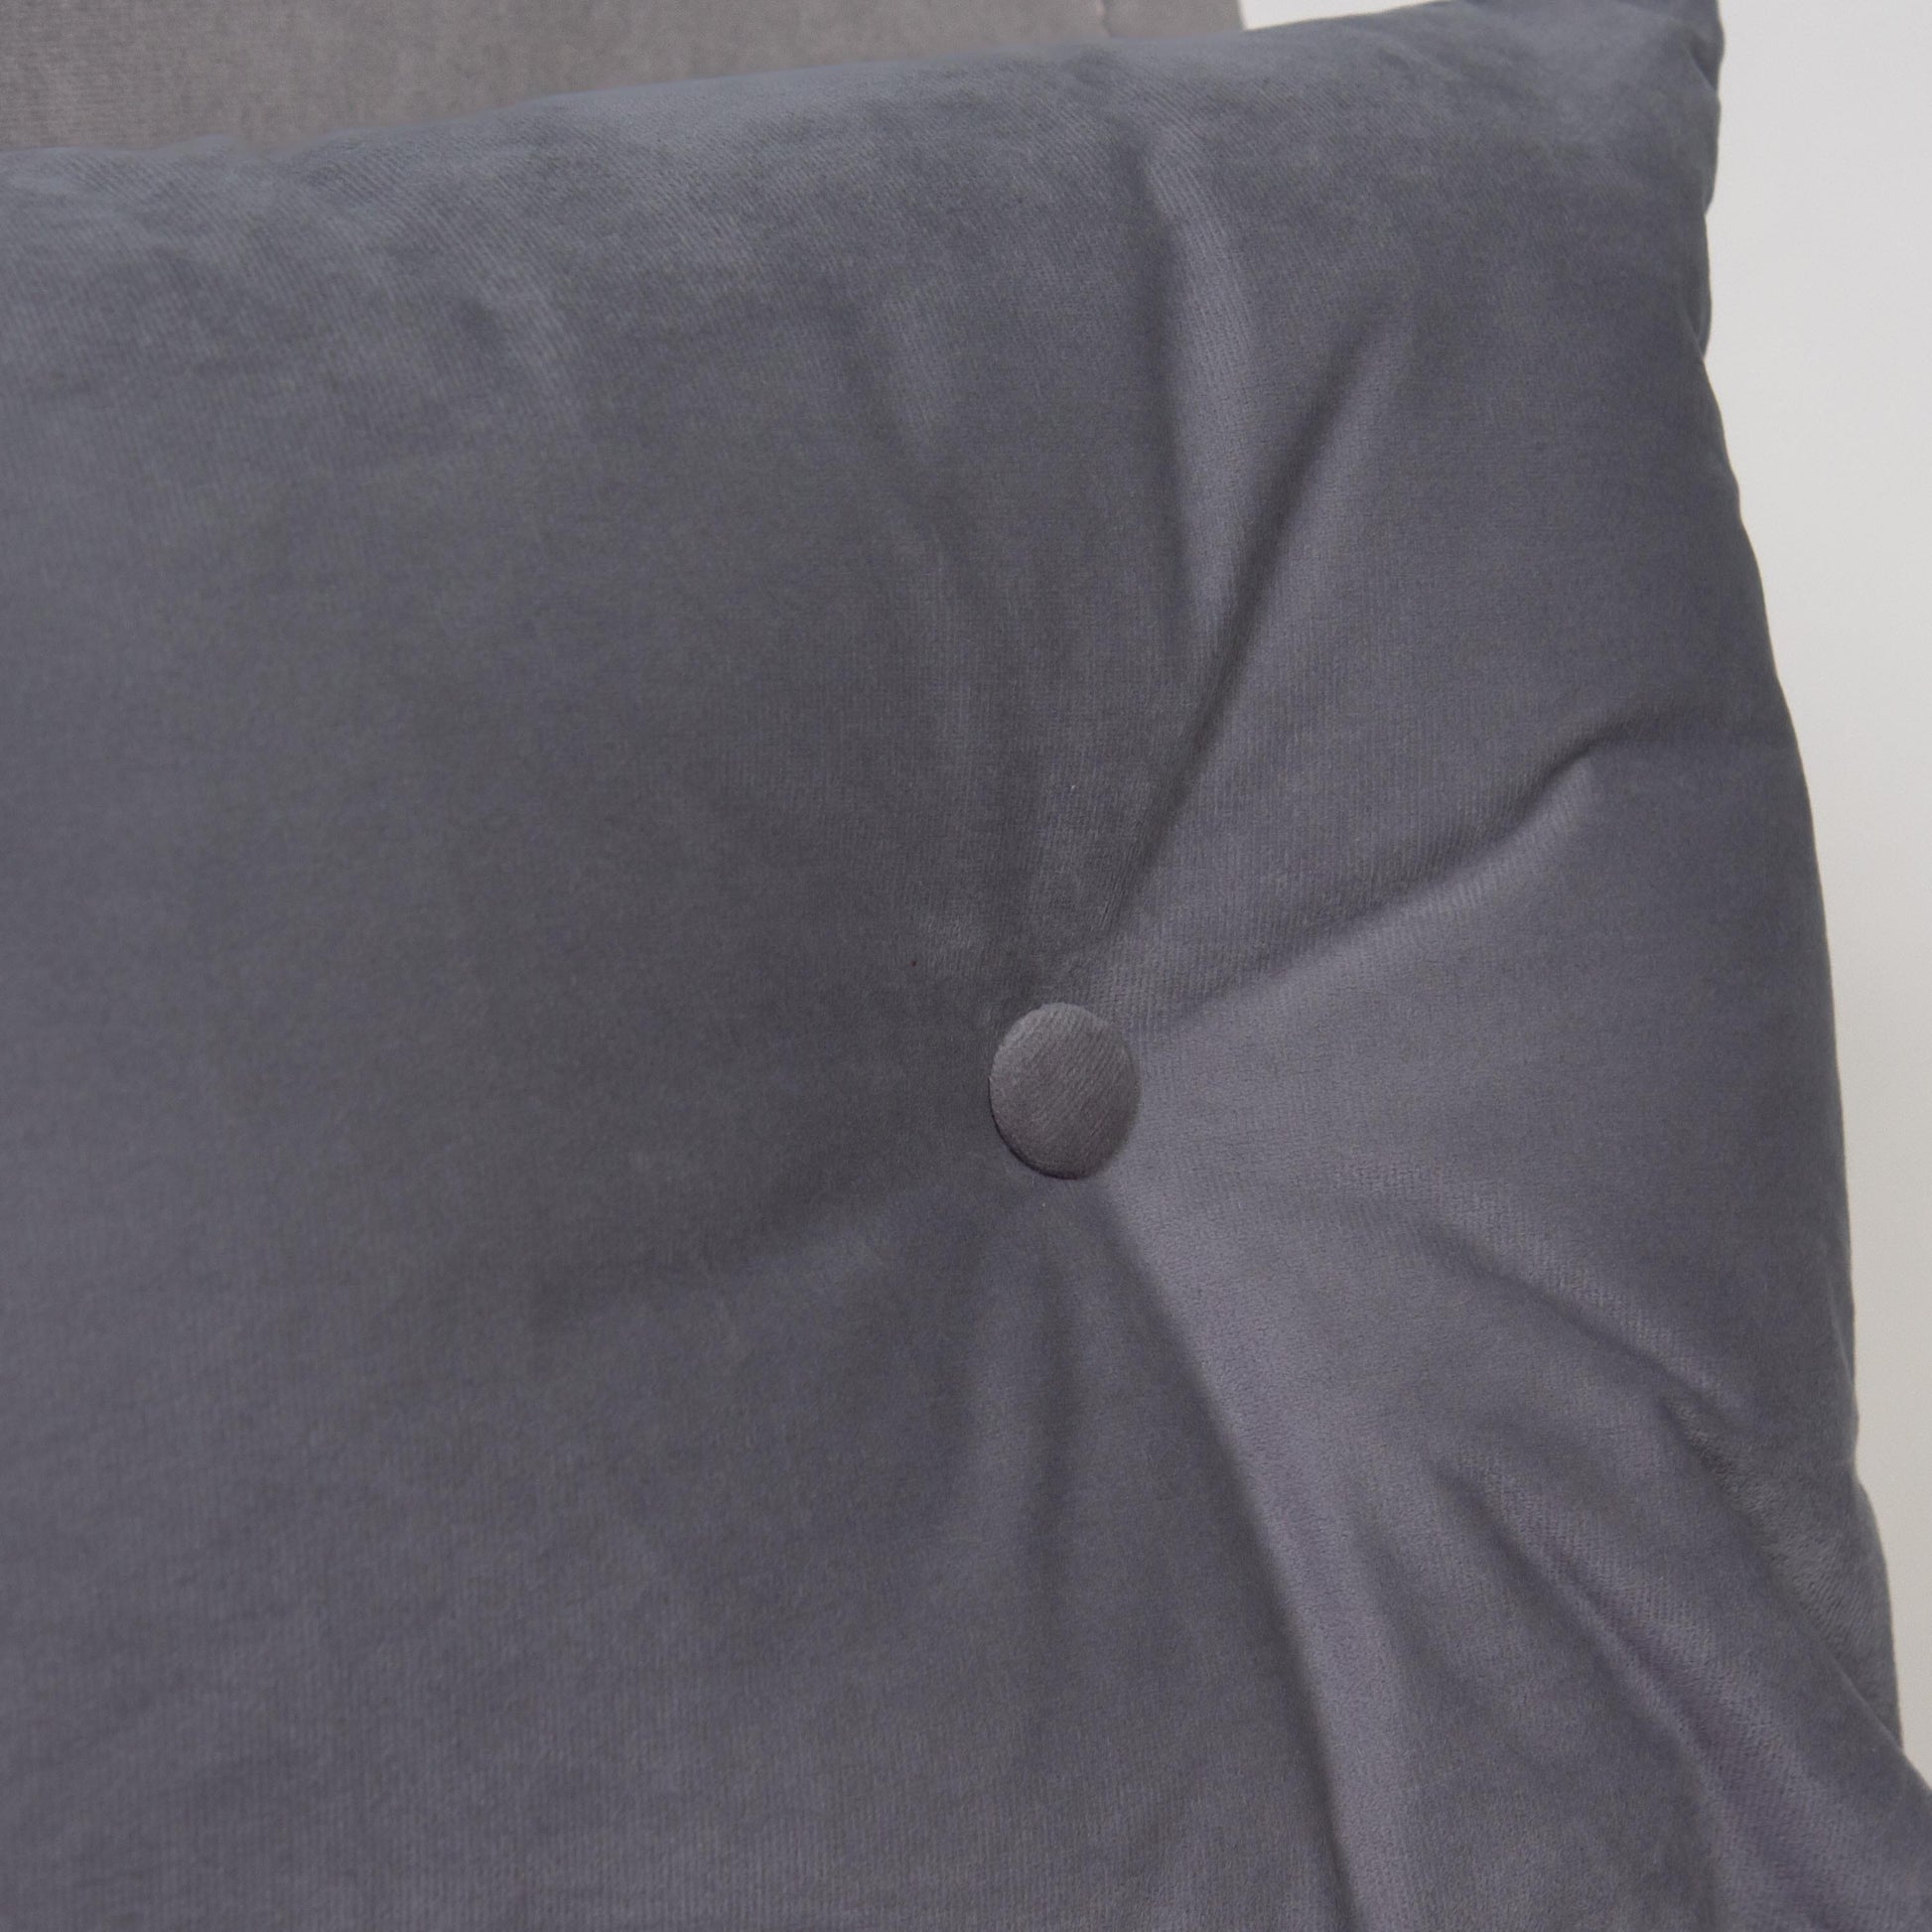 Una small double sofa bed - grey - Laura James